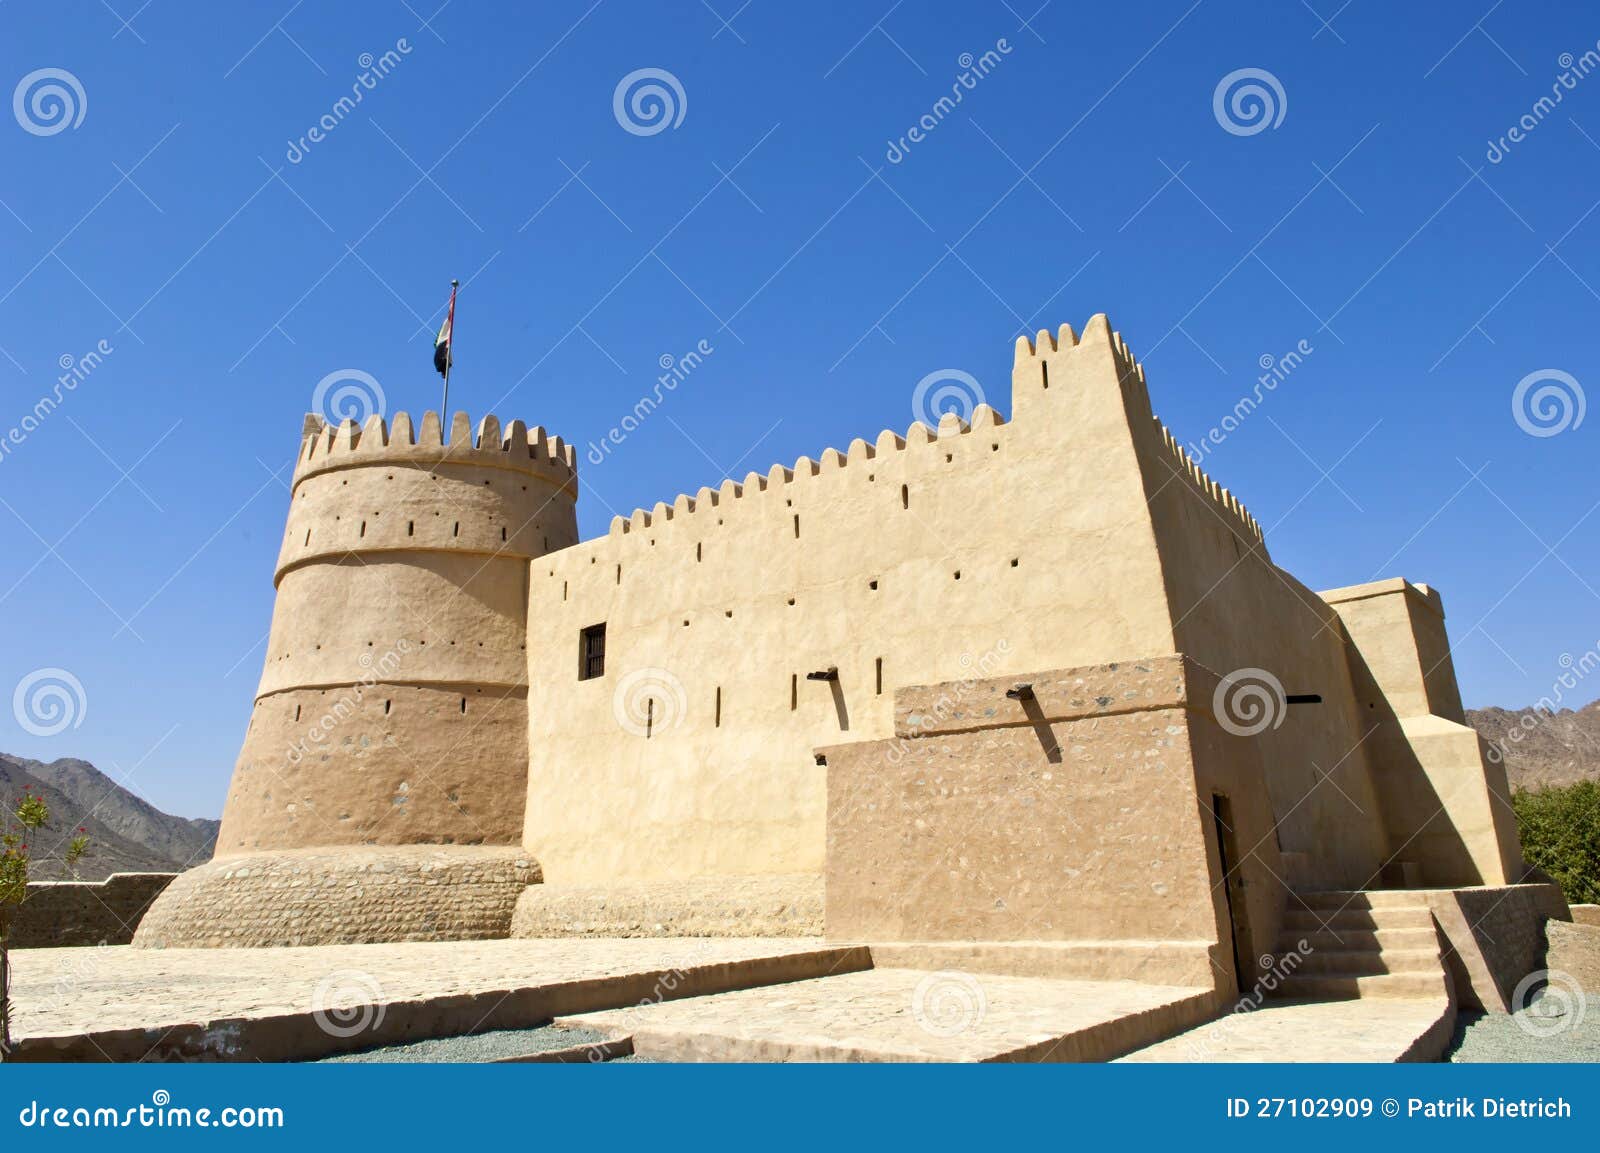 bithnah fort in fujairah united arab emirates